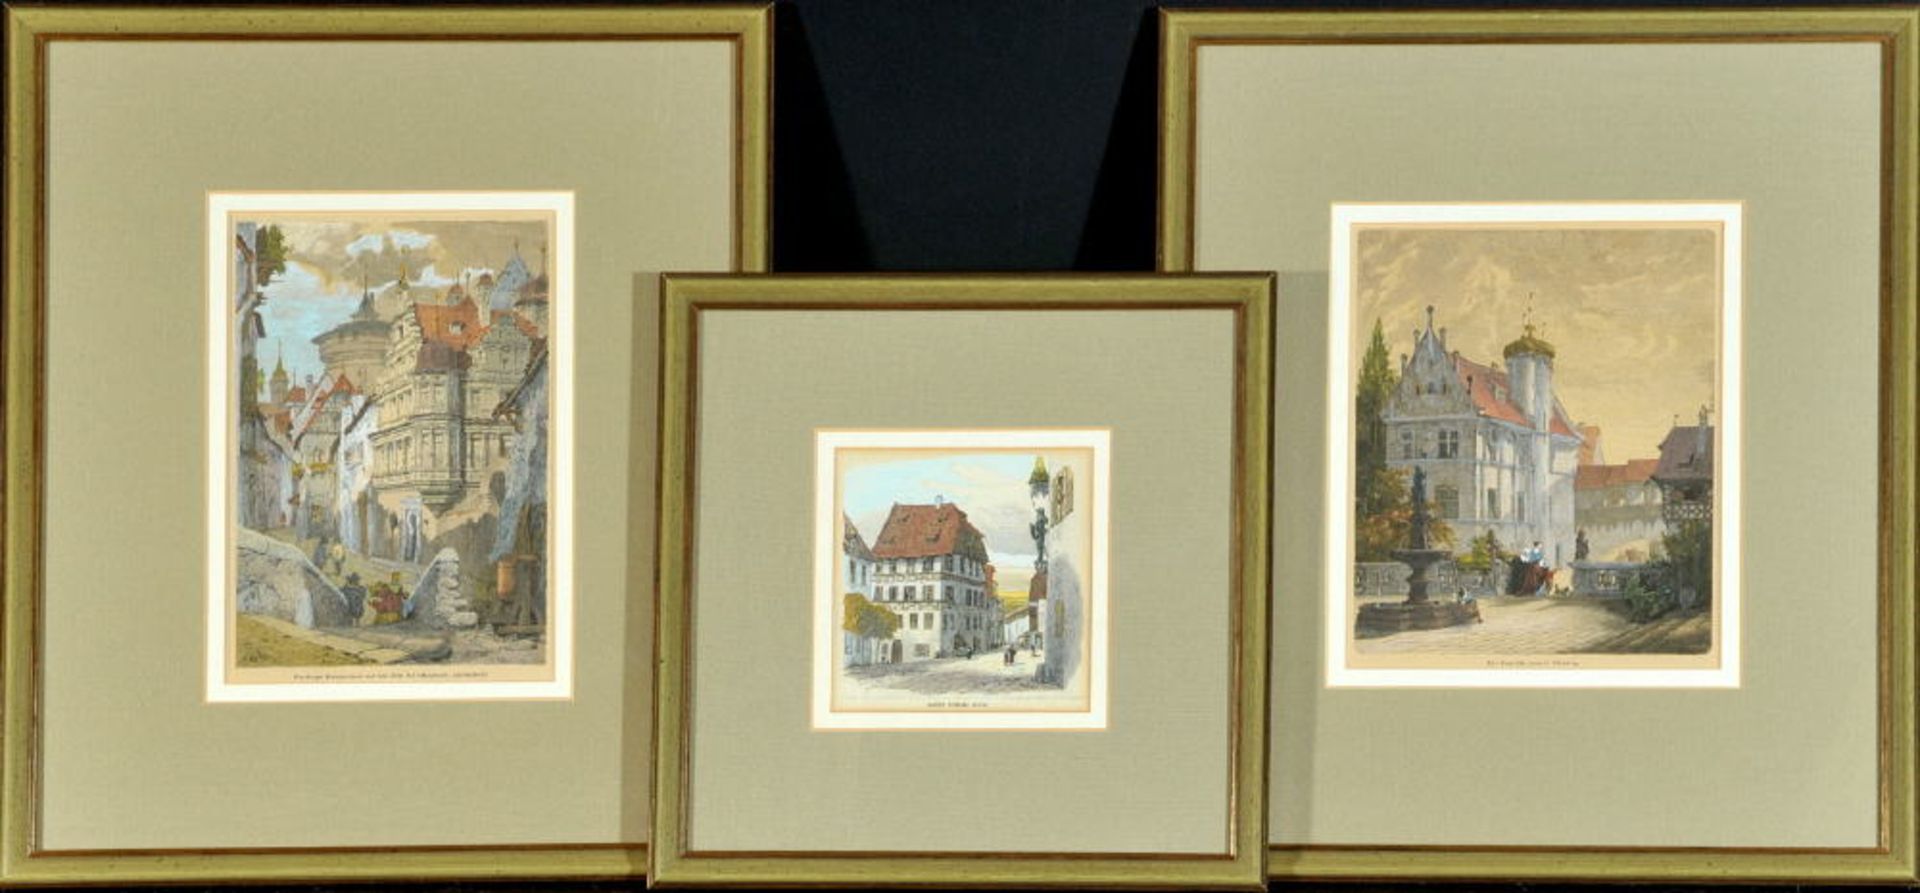 Nürnberg, 3 Teilansichten3 Holzstiche, handcolor., versch. Größen, 19. Jh., R